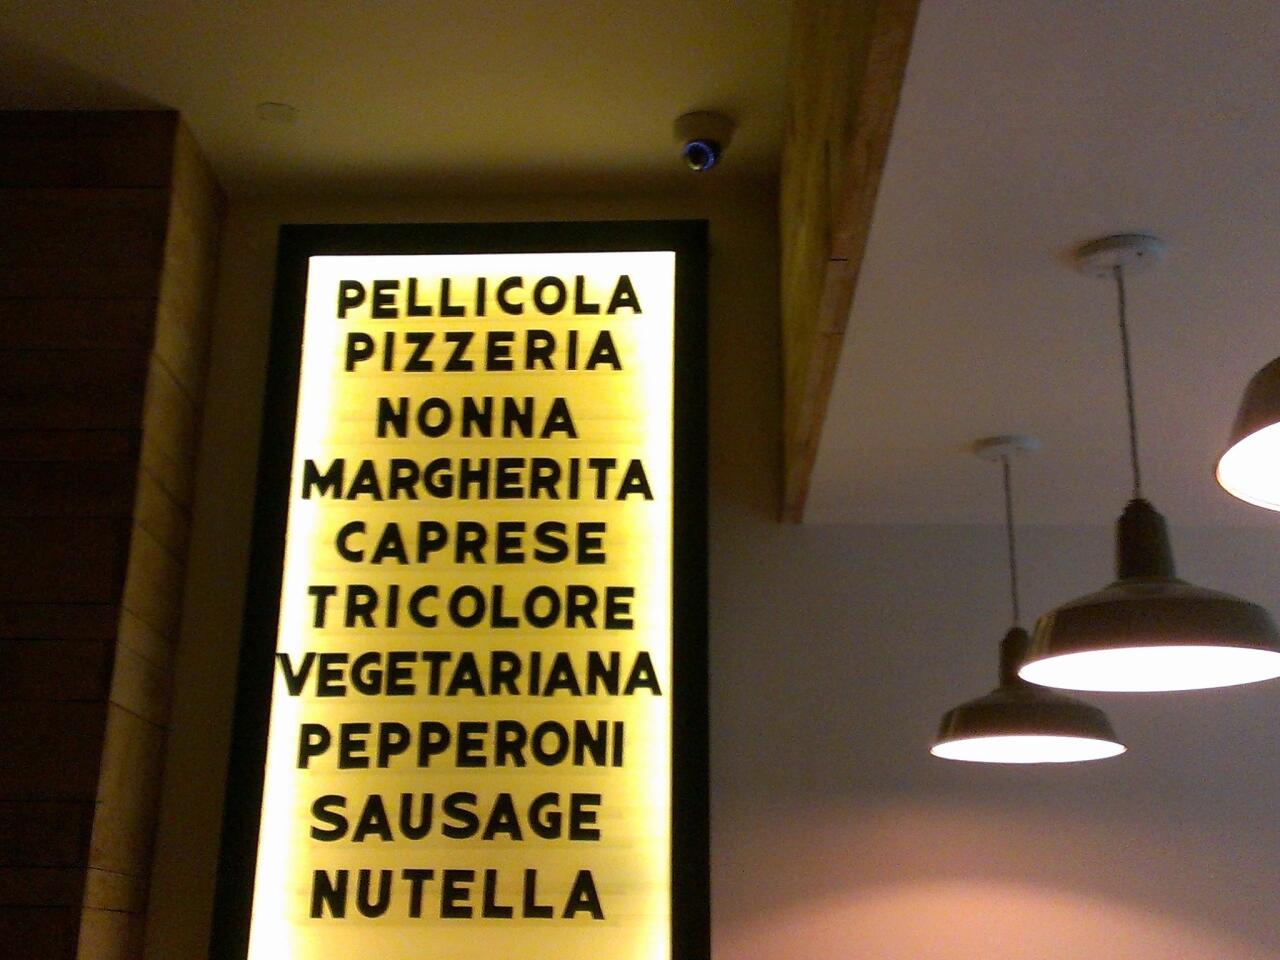 Pellicola's menu of pizzas, including the Nutella dessert pizza.